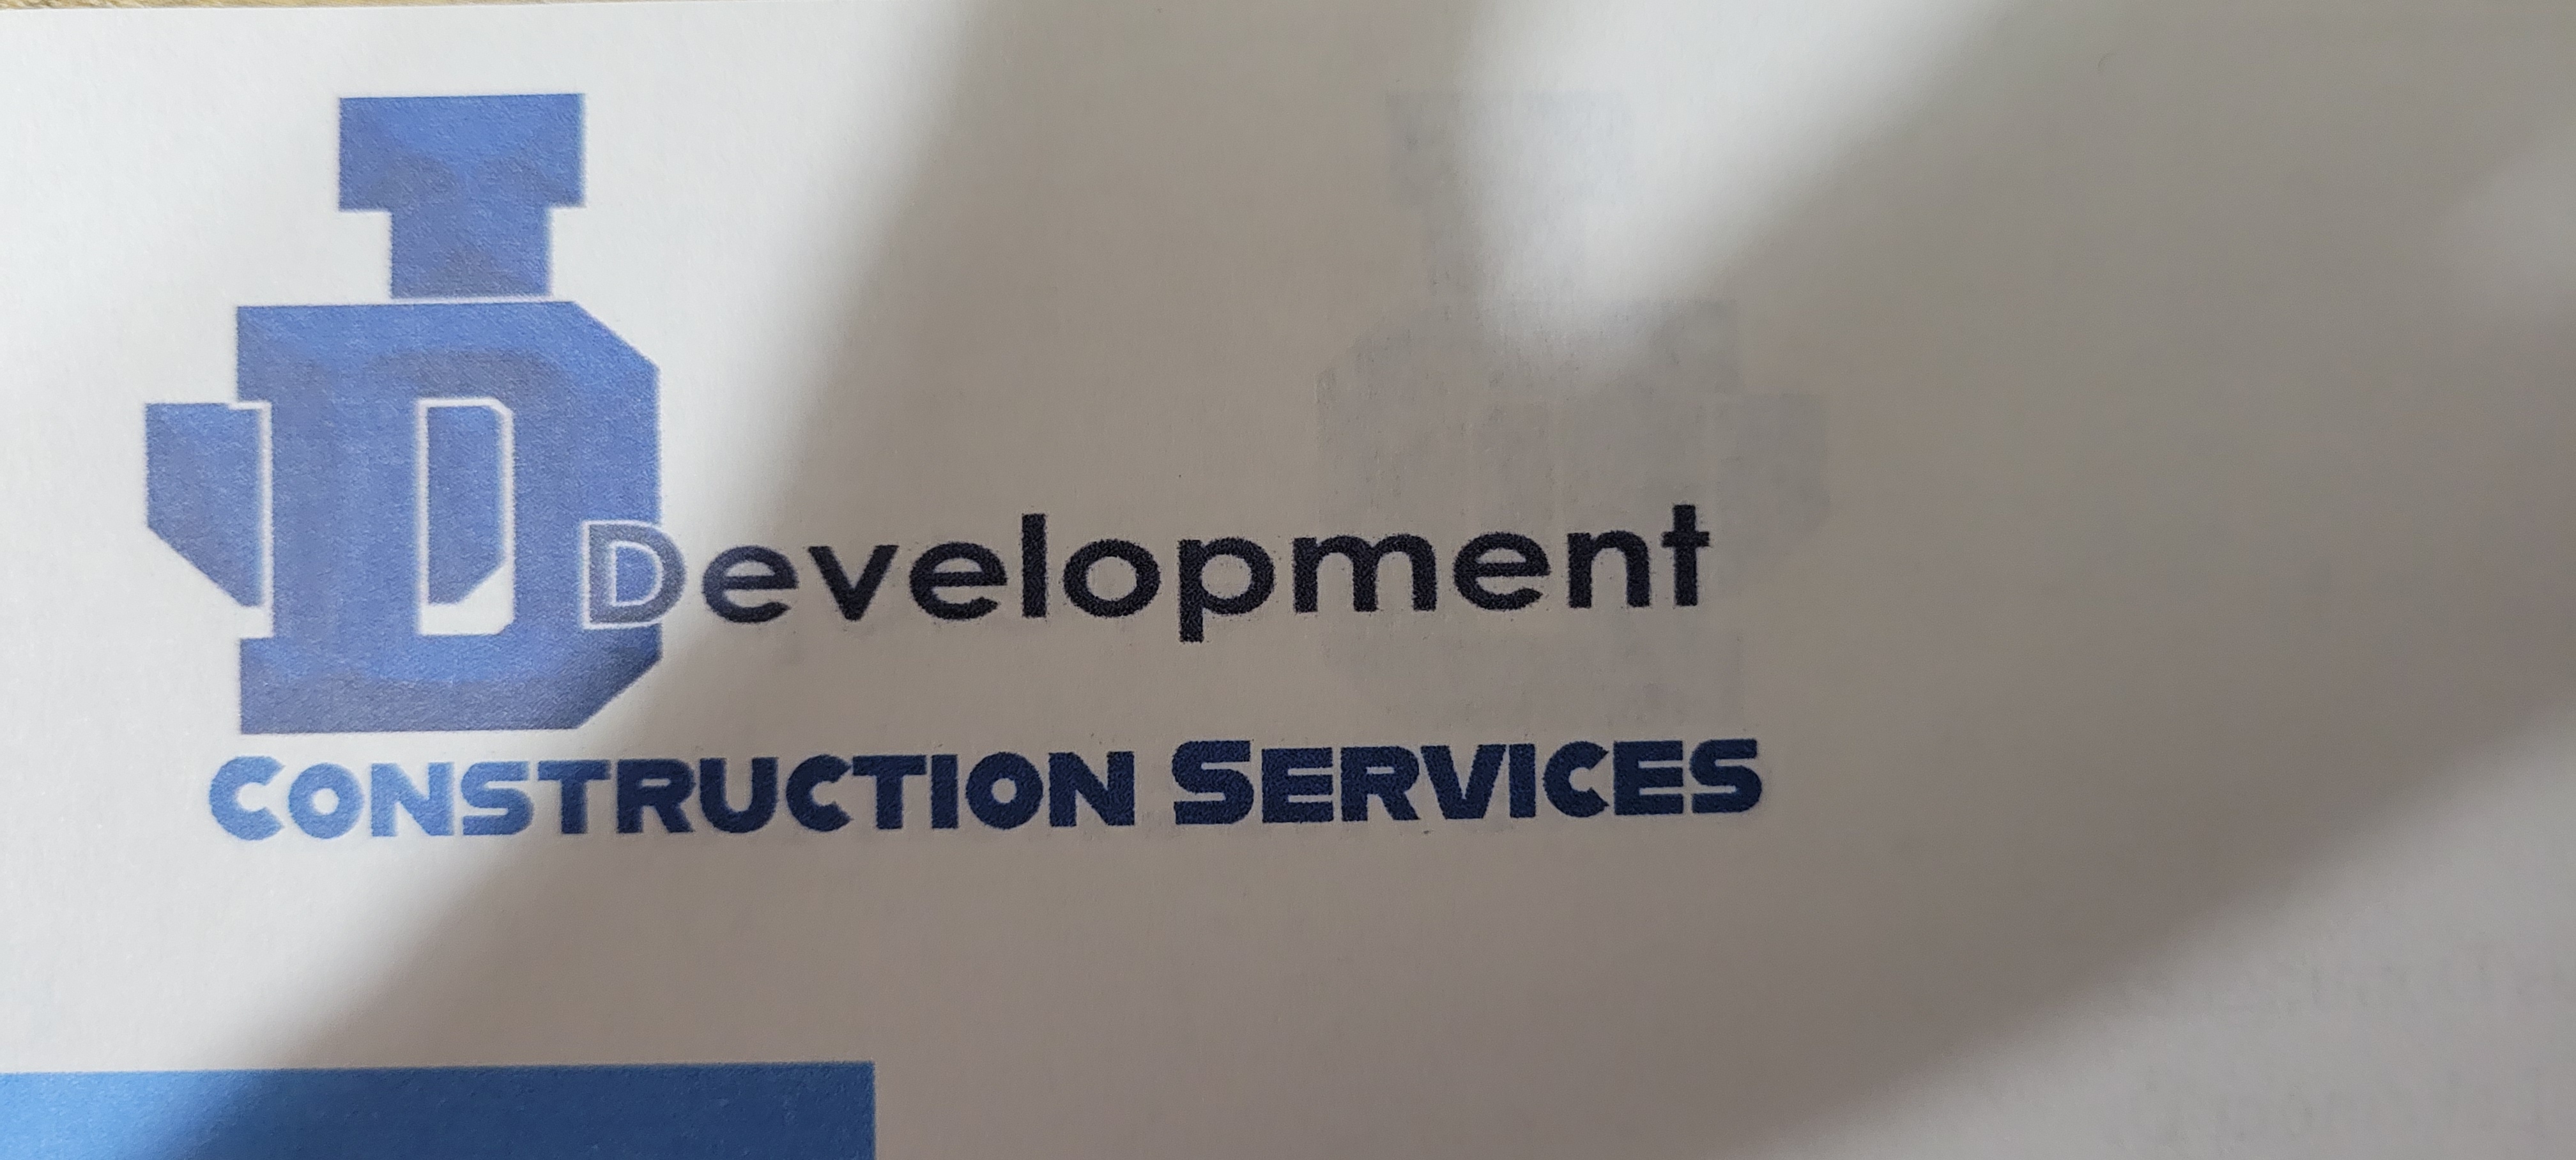 JD Development Construction Services Logo